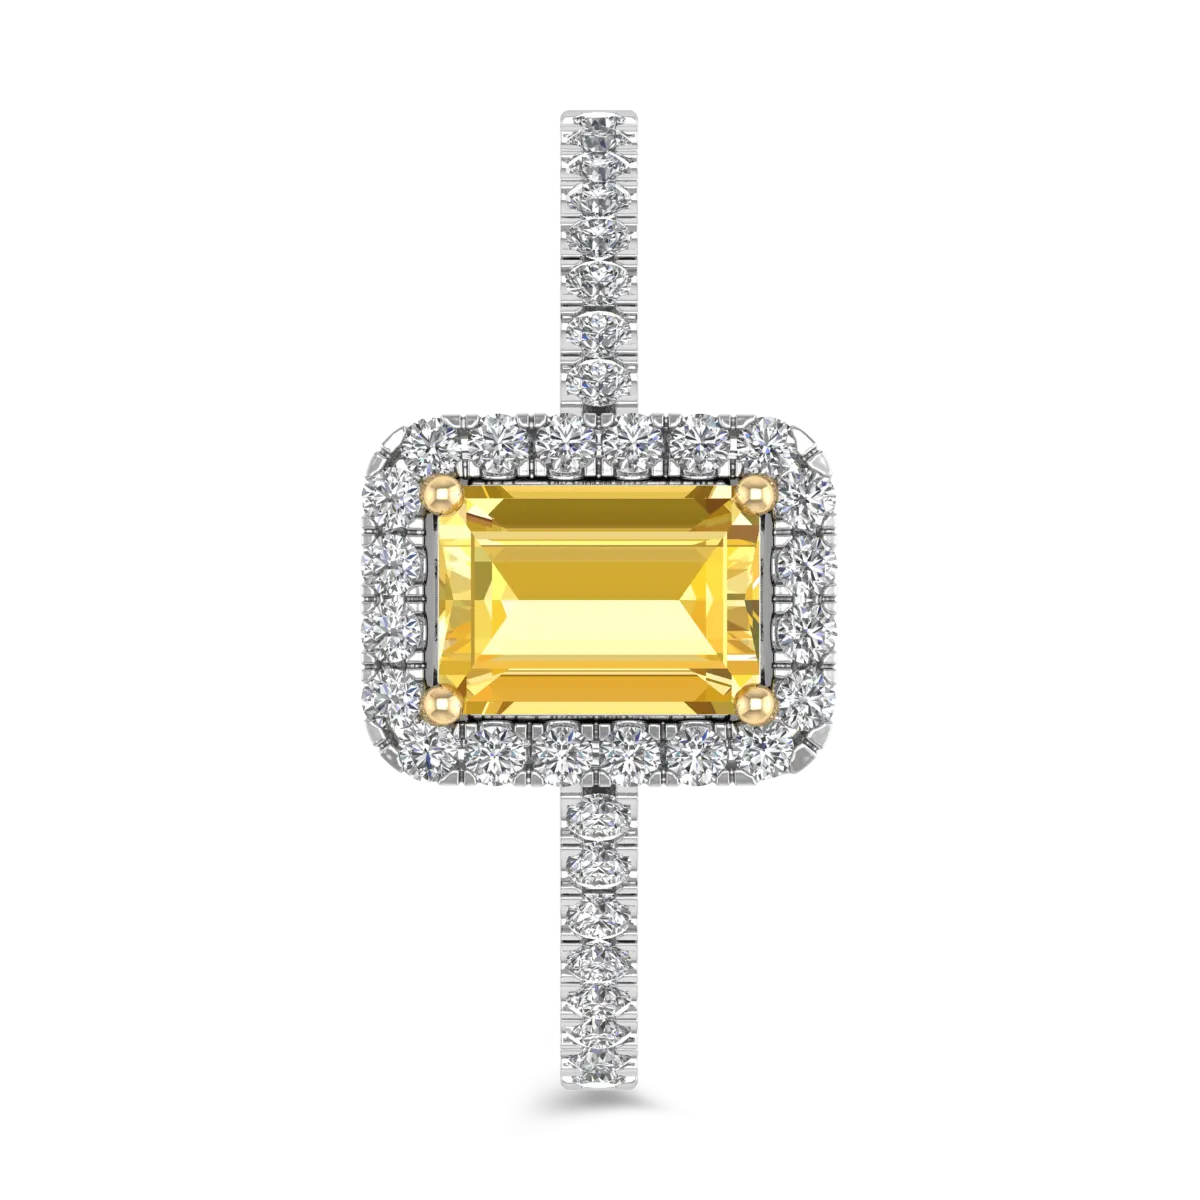 Inel de logodna din aur alb de 18K cu safir galben de 0.72ct si diamante de 0.28ct